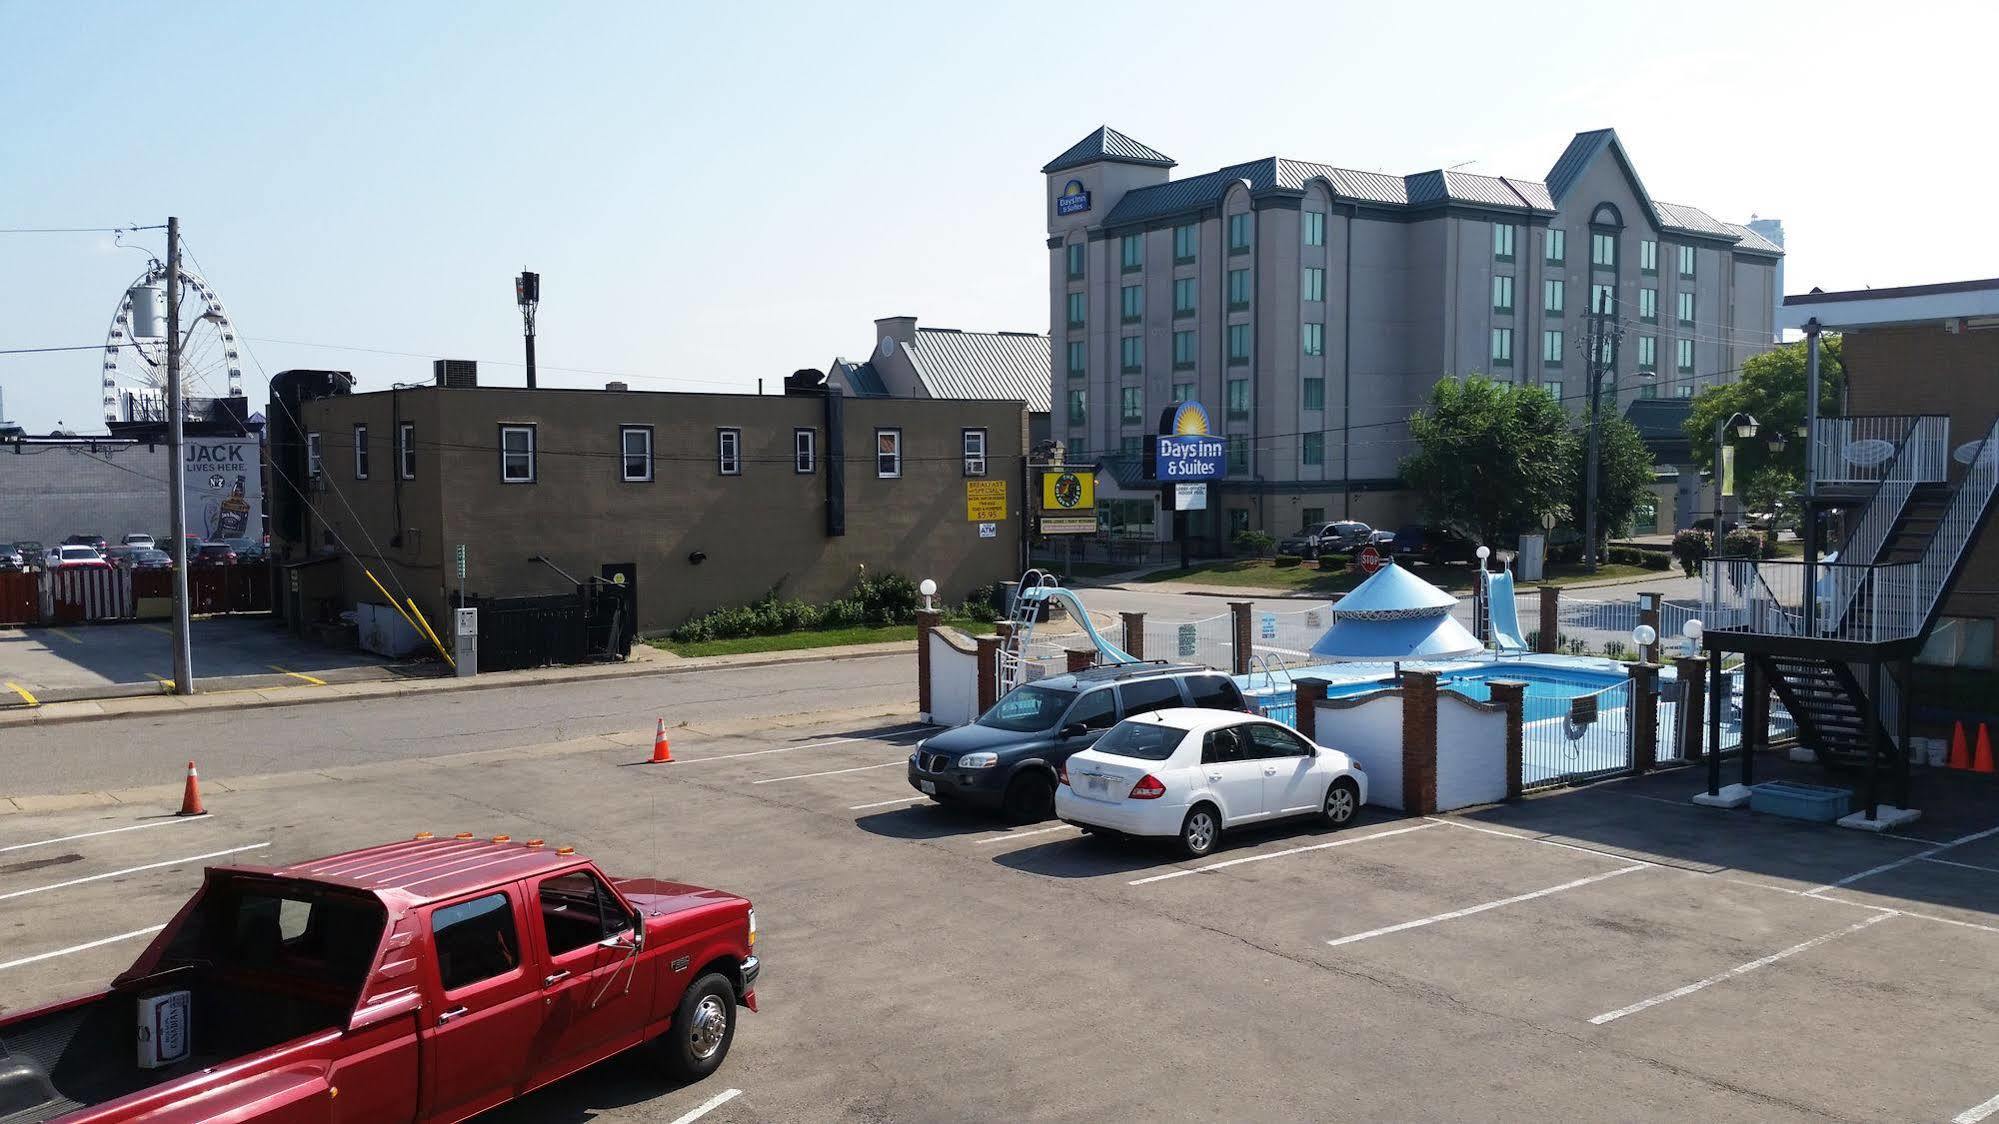 Olympia Motel Niagara Falls Exterior photo